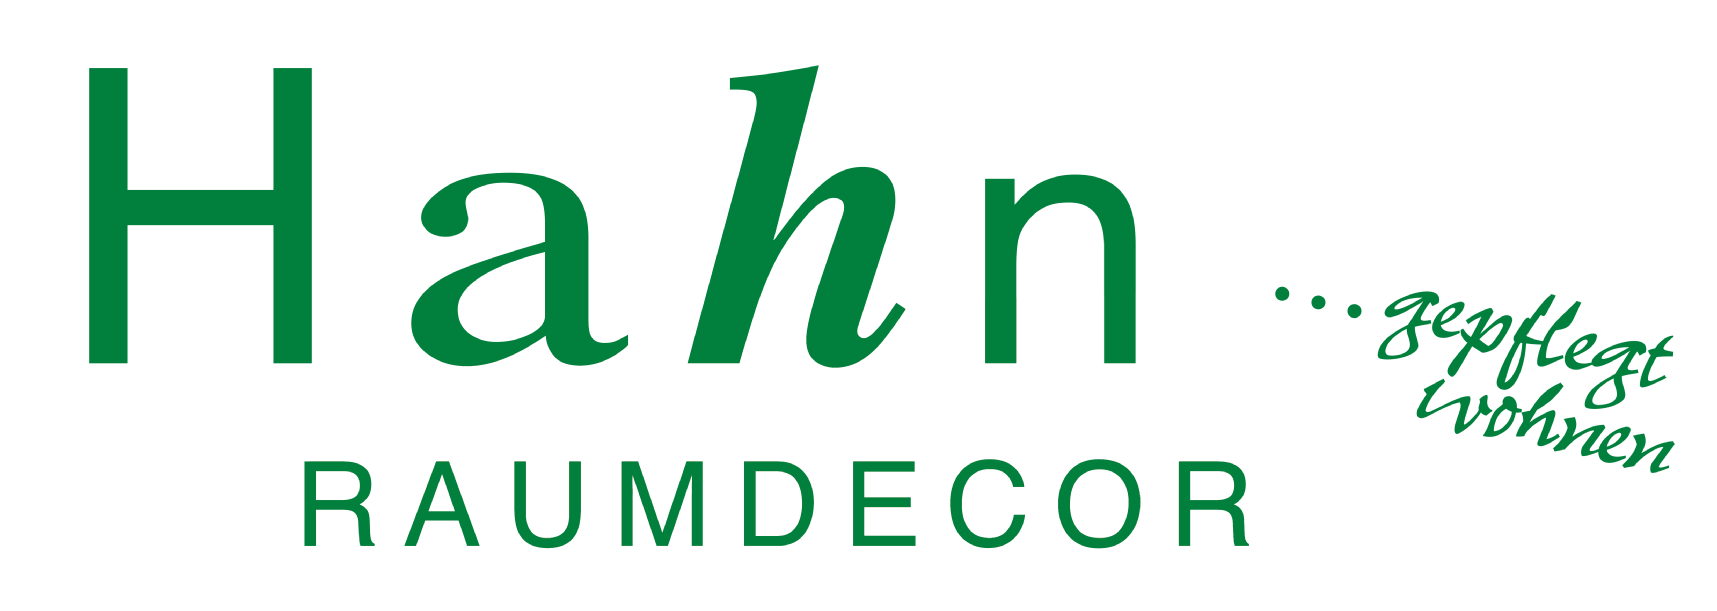 Hahn Raumdecor Logo